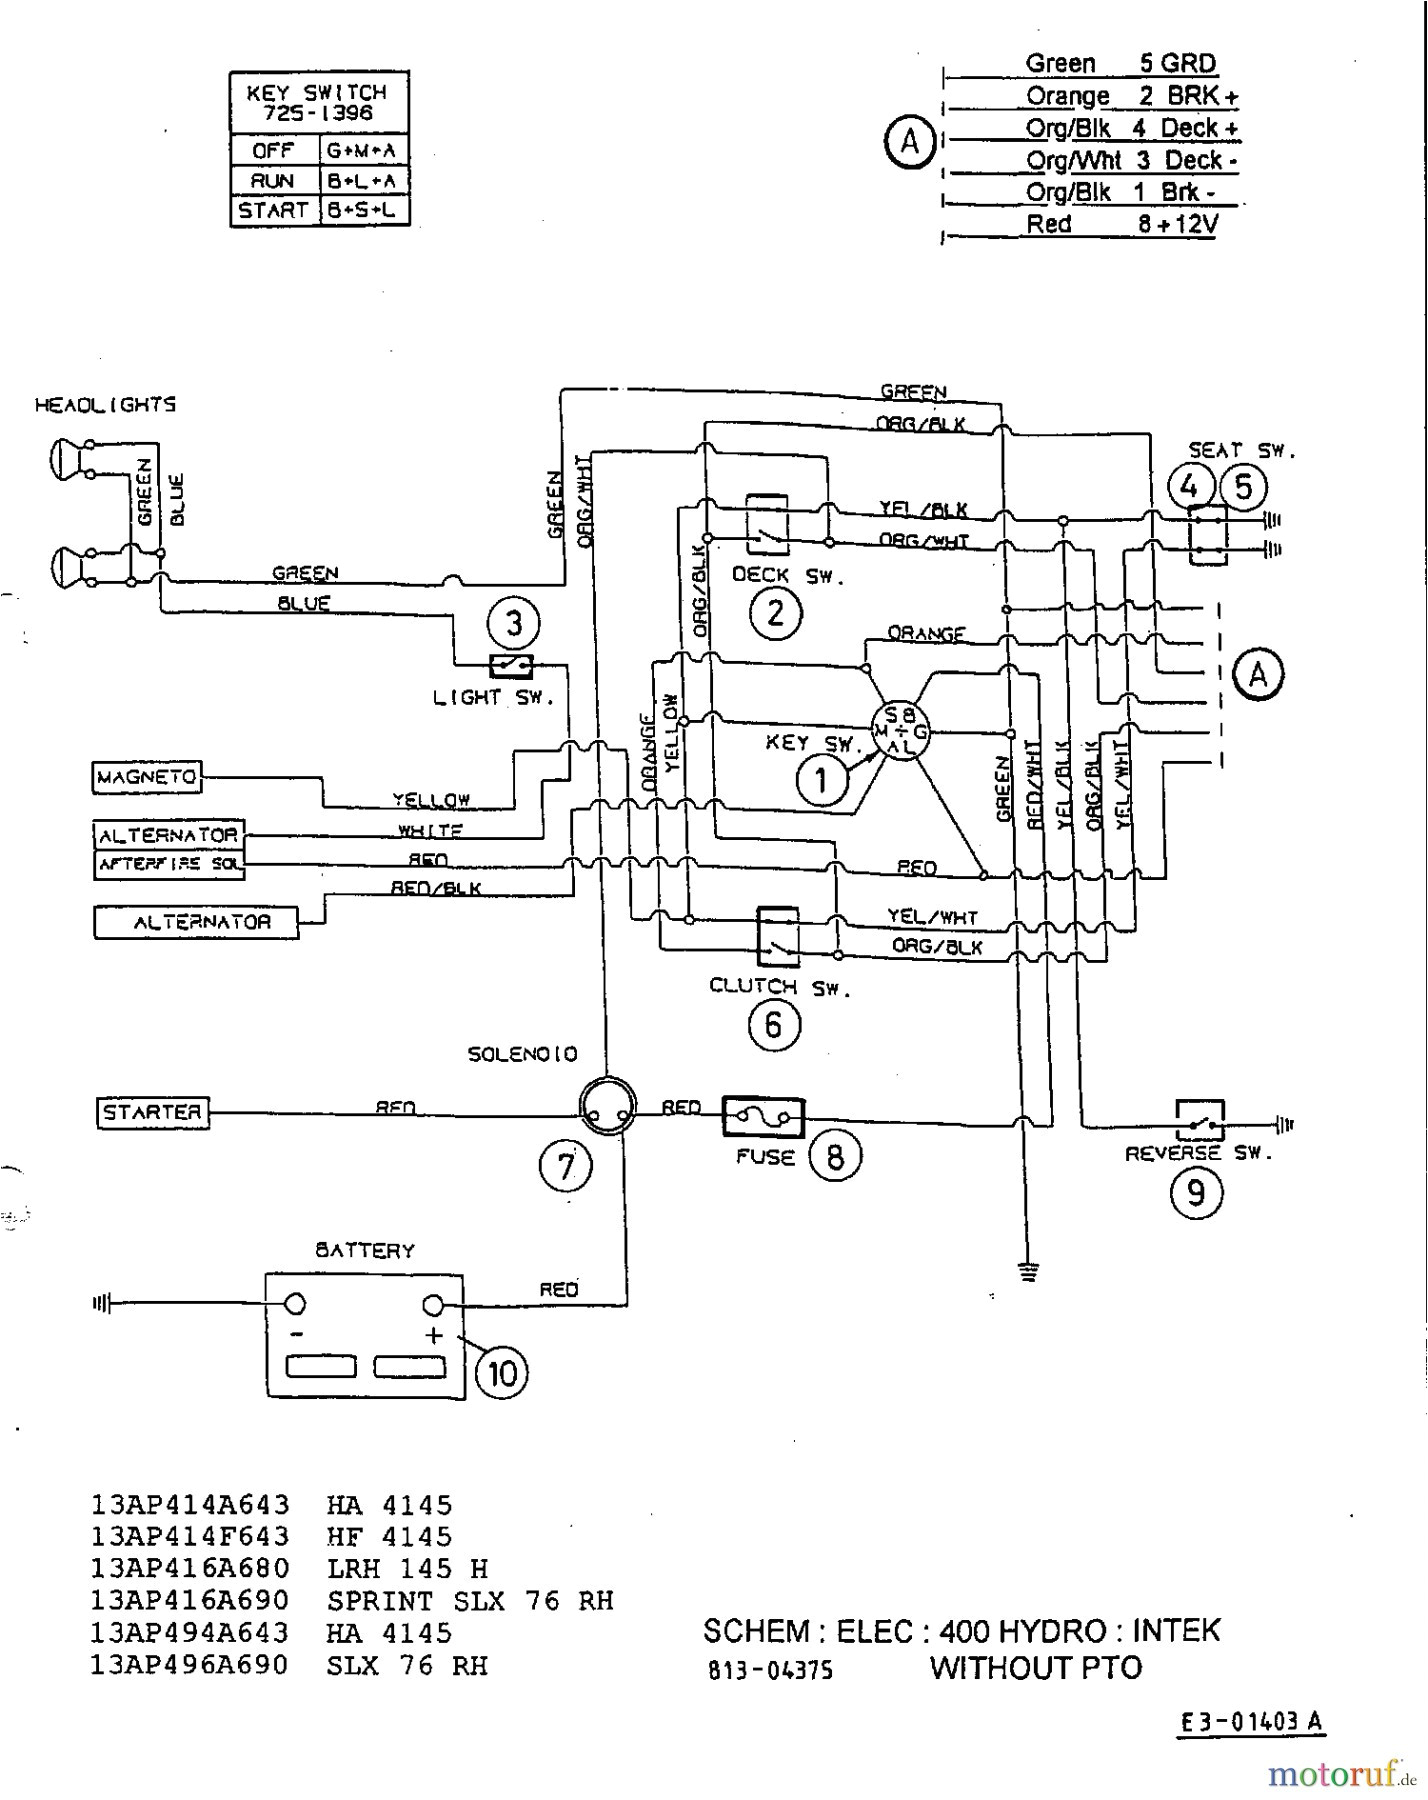 wire diagram huskee mtd wiring diagram paperwire diagram huskee mtd wiring diagram datasource wire diagram huskee